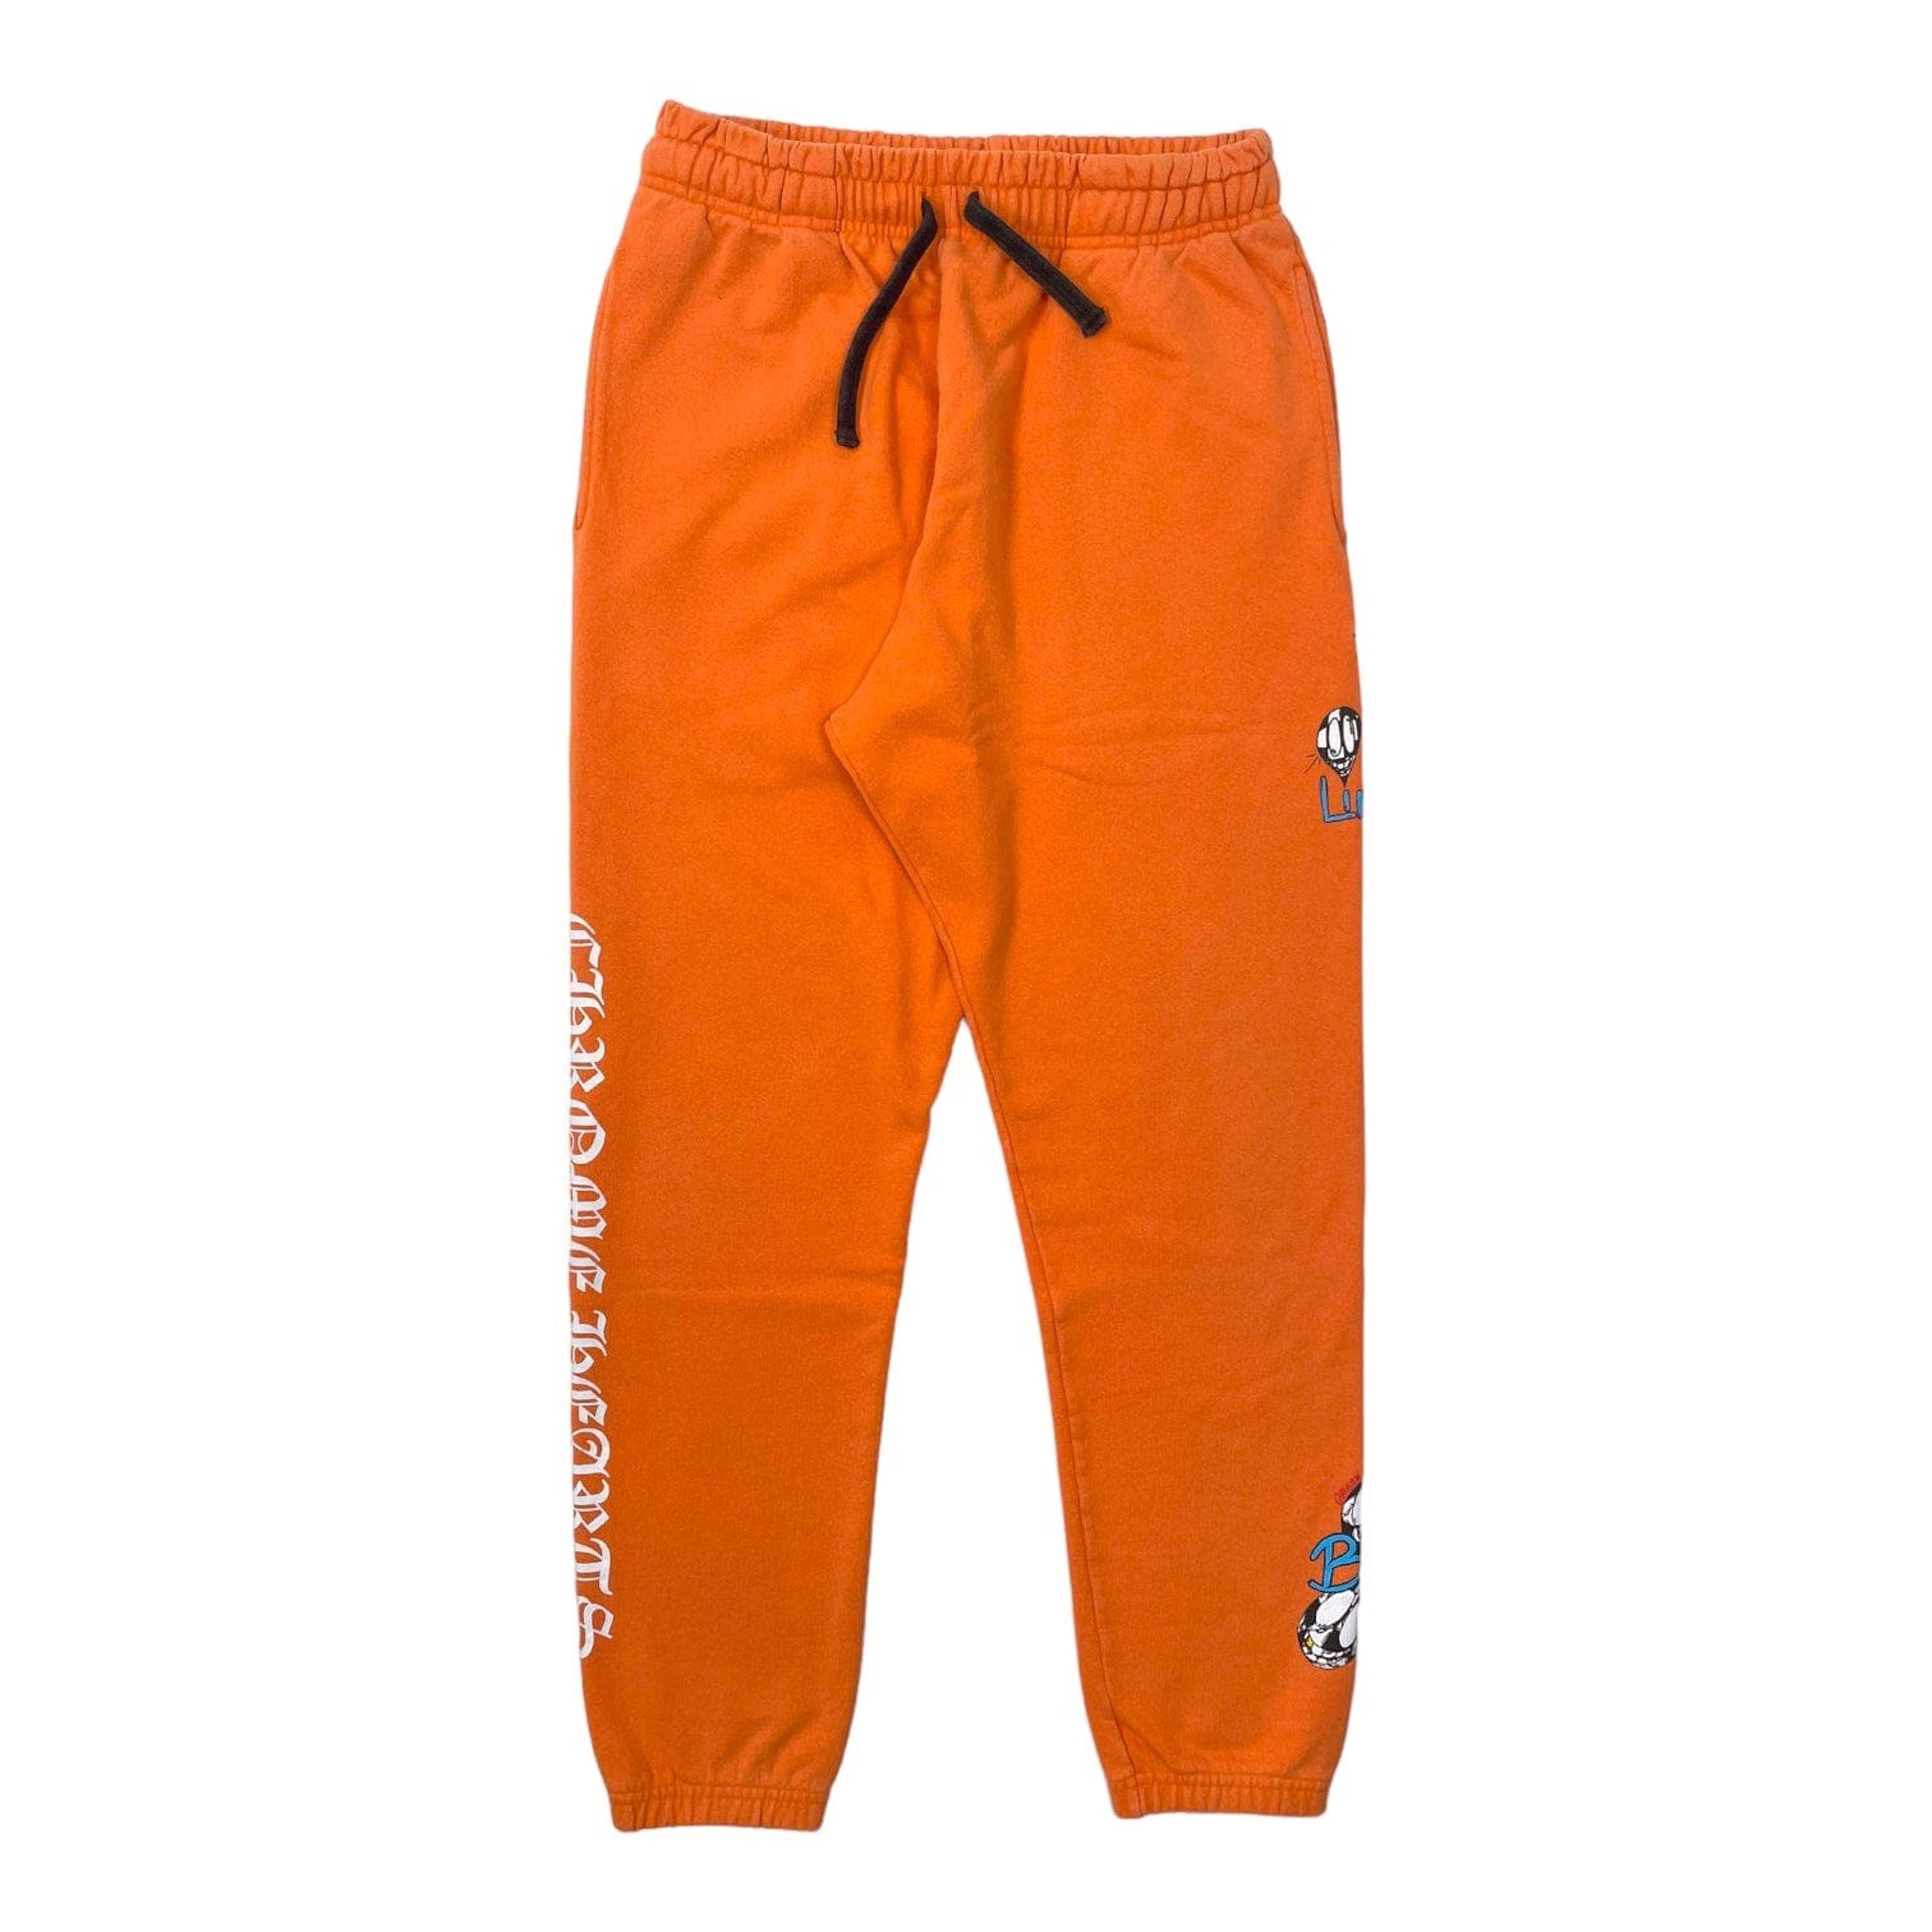 Chrome Hearts Matty Boy Link & Build Sweatpants Orange Pre-Owned